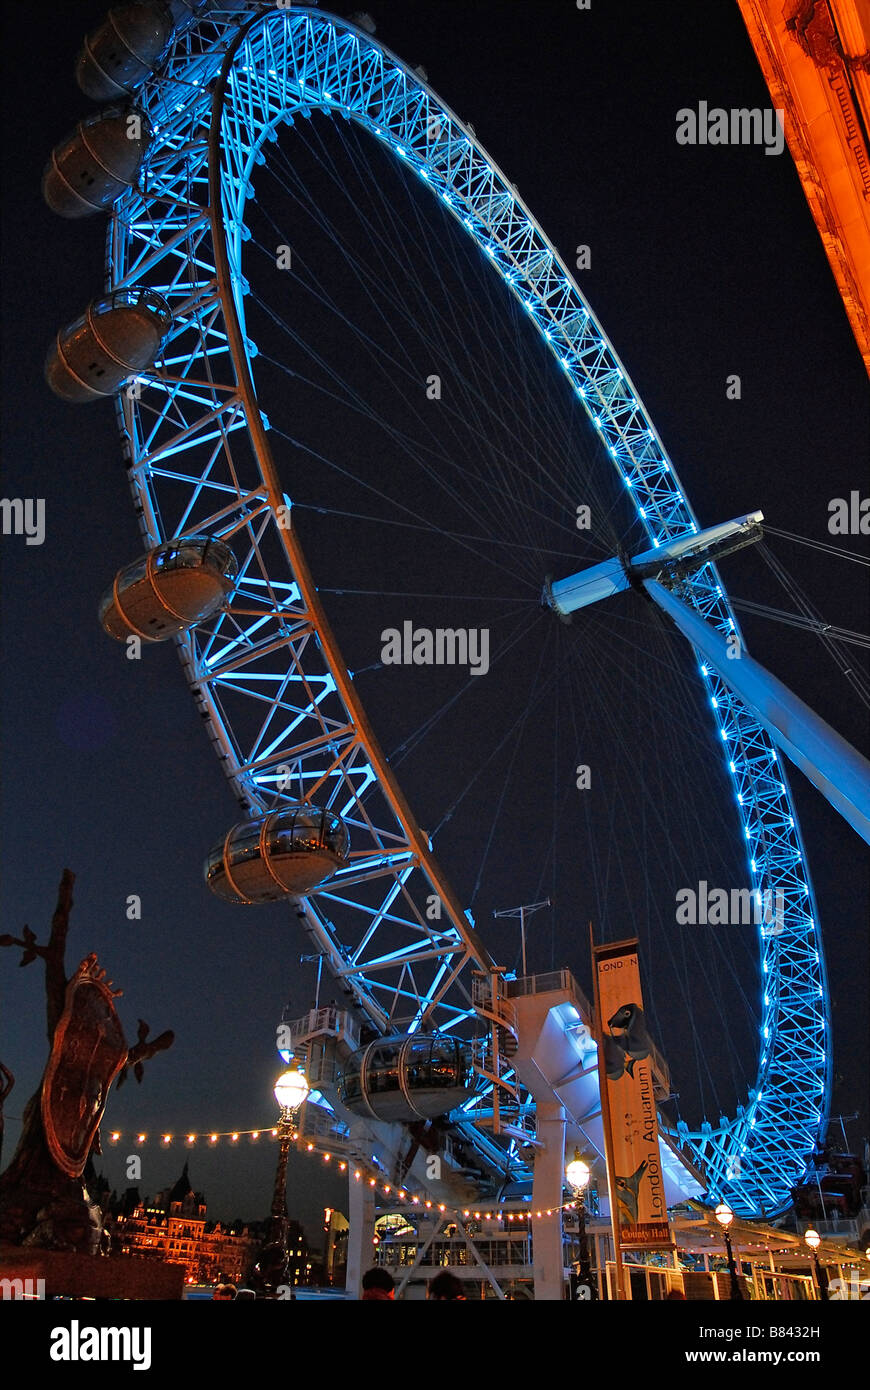 London Eye at night, London, UK Stock Photo